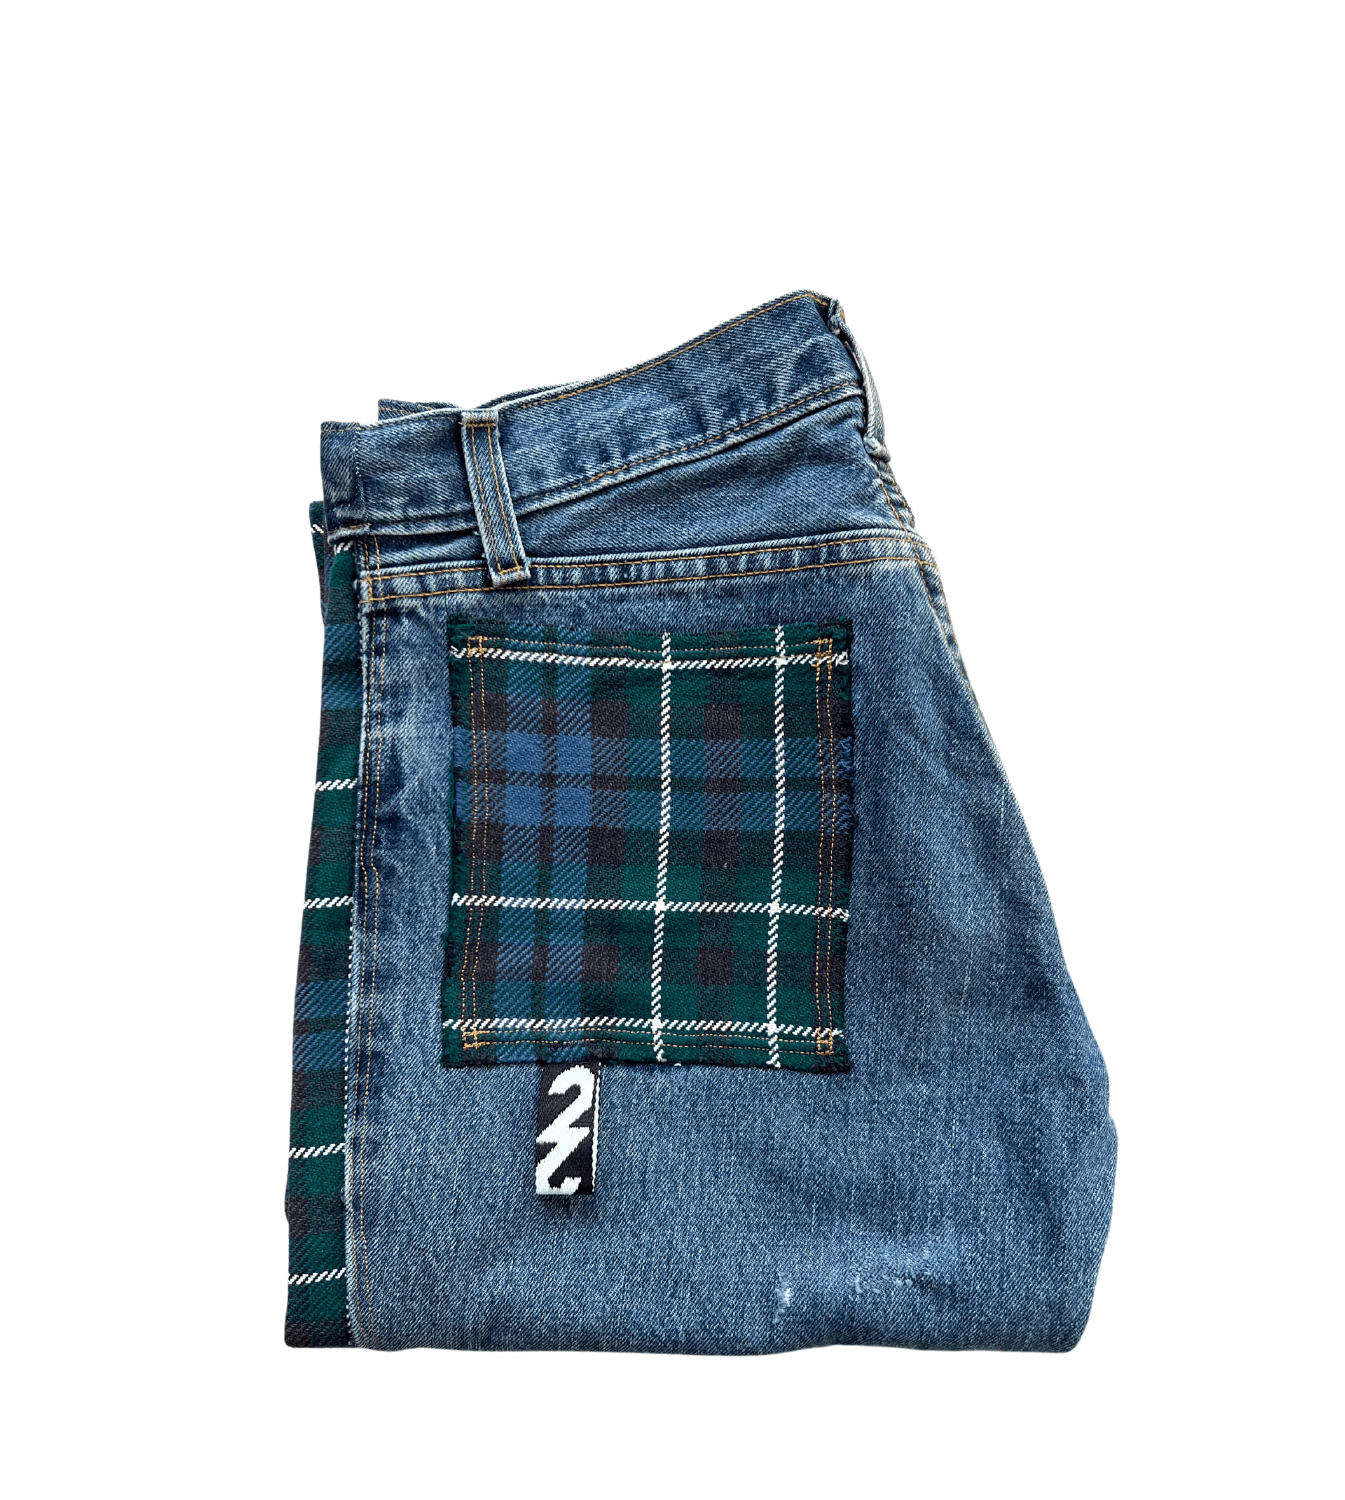 jeans-levis-rework-madeindijon-artisanat-poche-details-2c